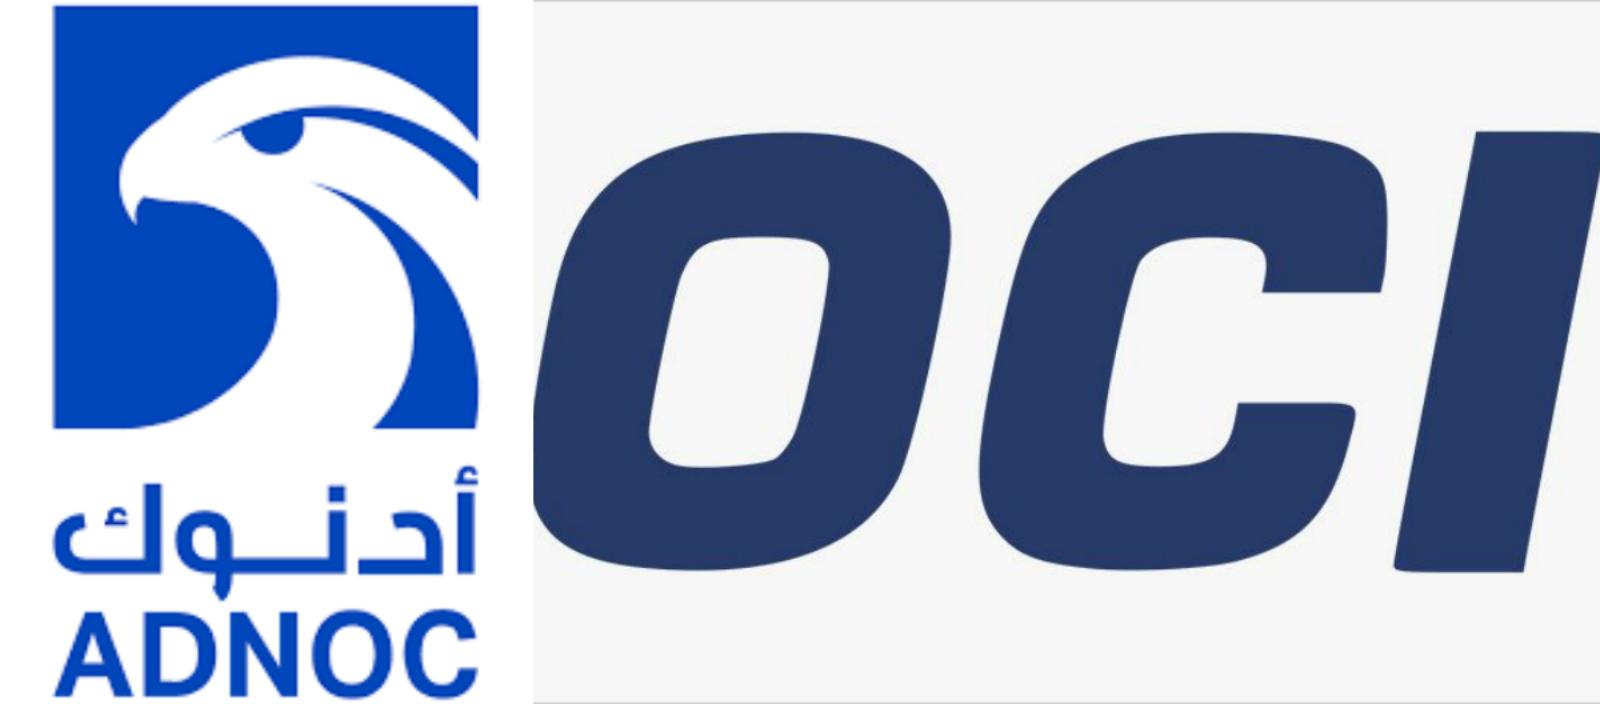 OCI Logo - OCI NV, ADNOC create JV combining their Middle East Fertilizers